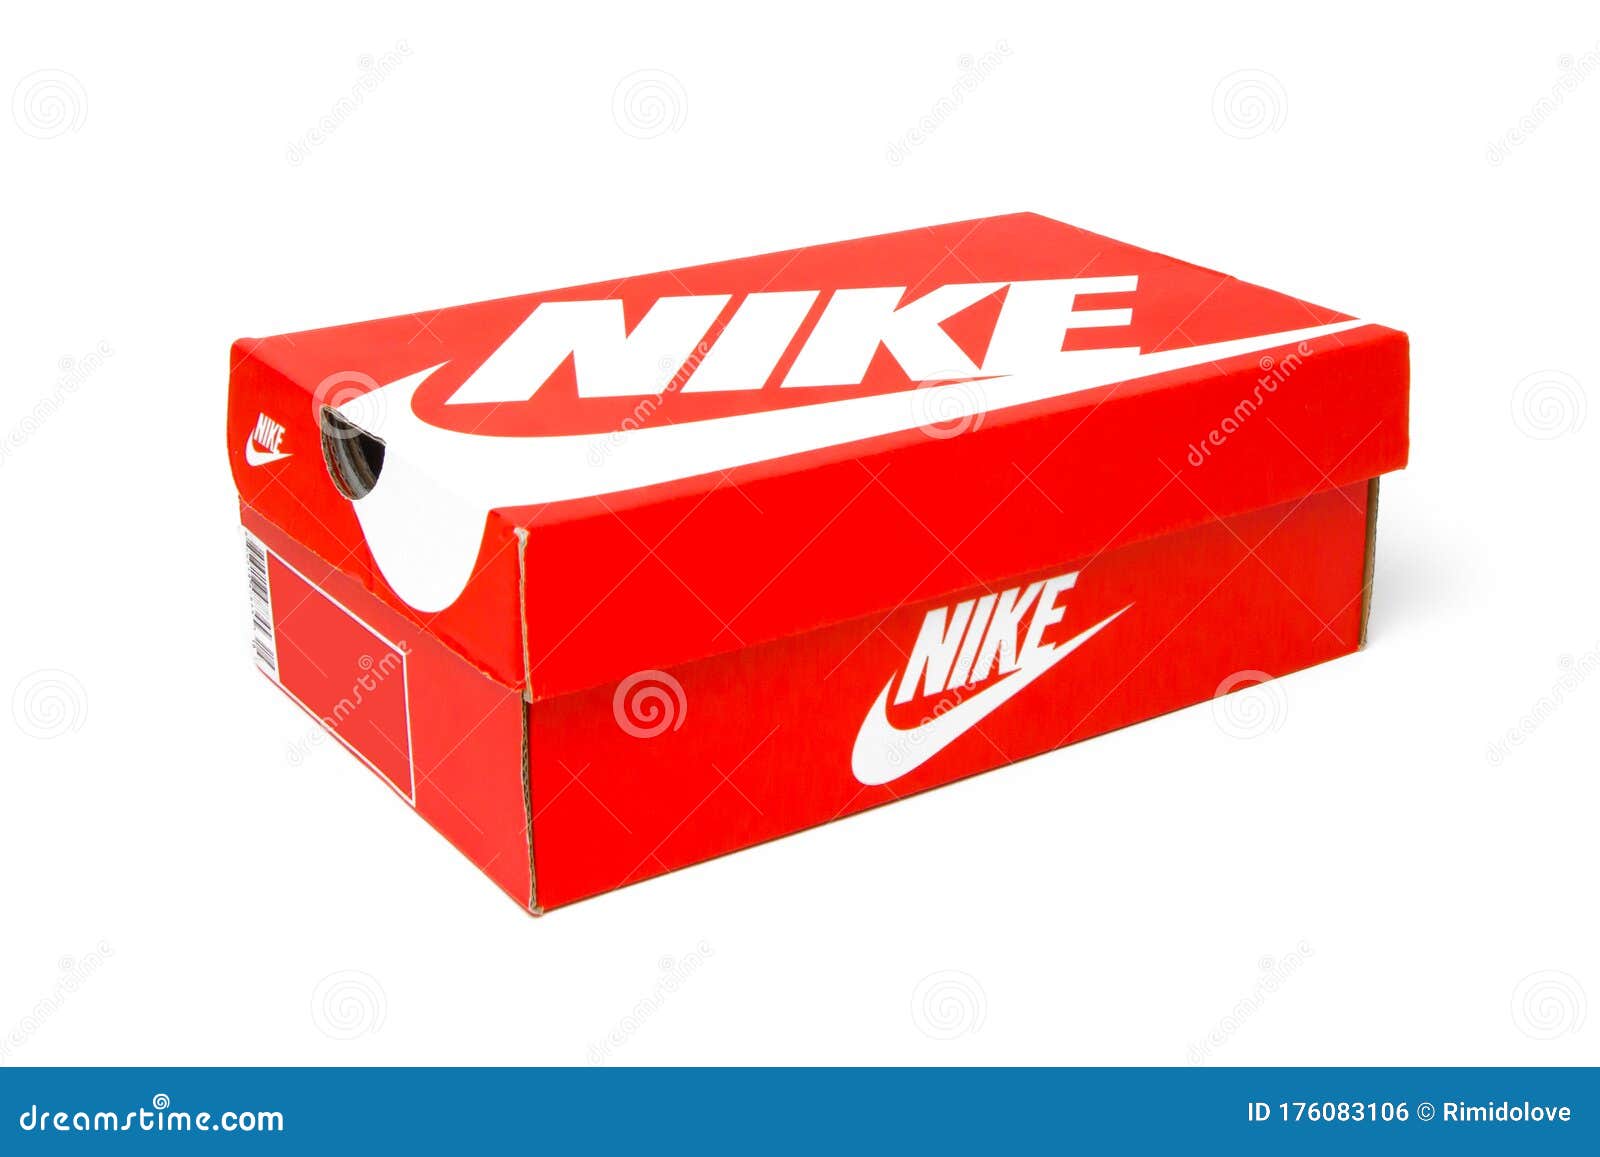 nike store that looks like a shoe box